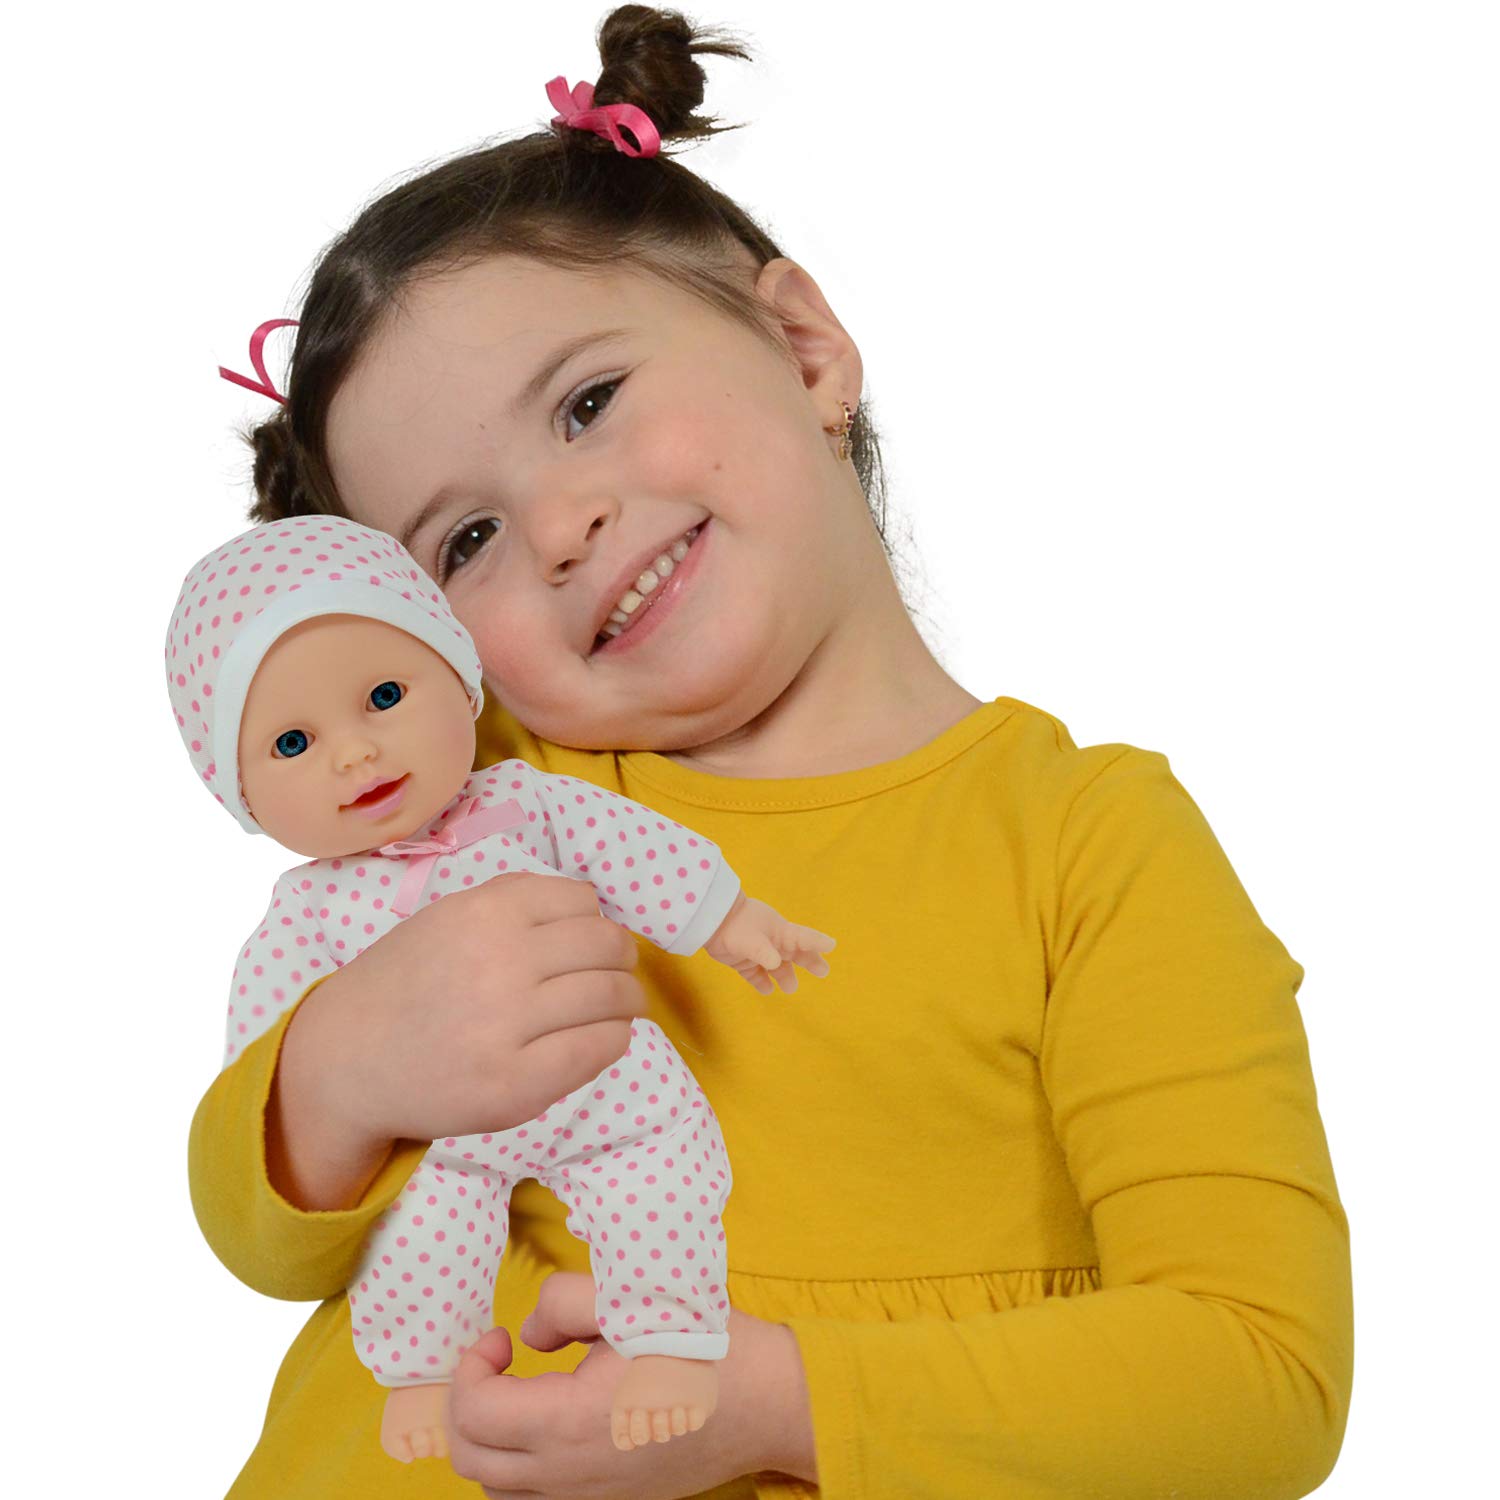 11 inch Soft Body Doll in Gift Box - Award Winner & Toy 11